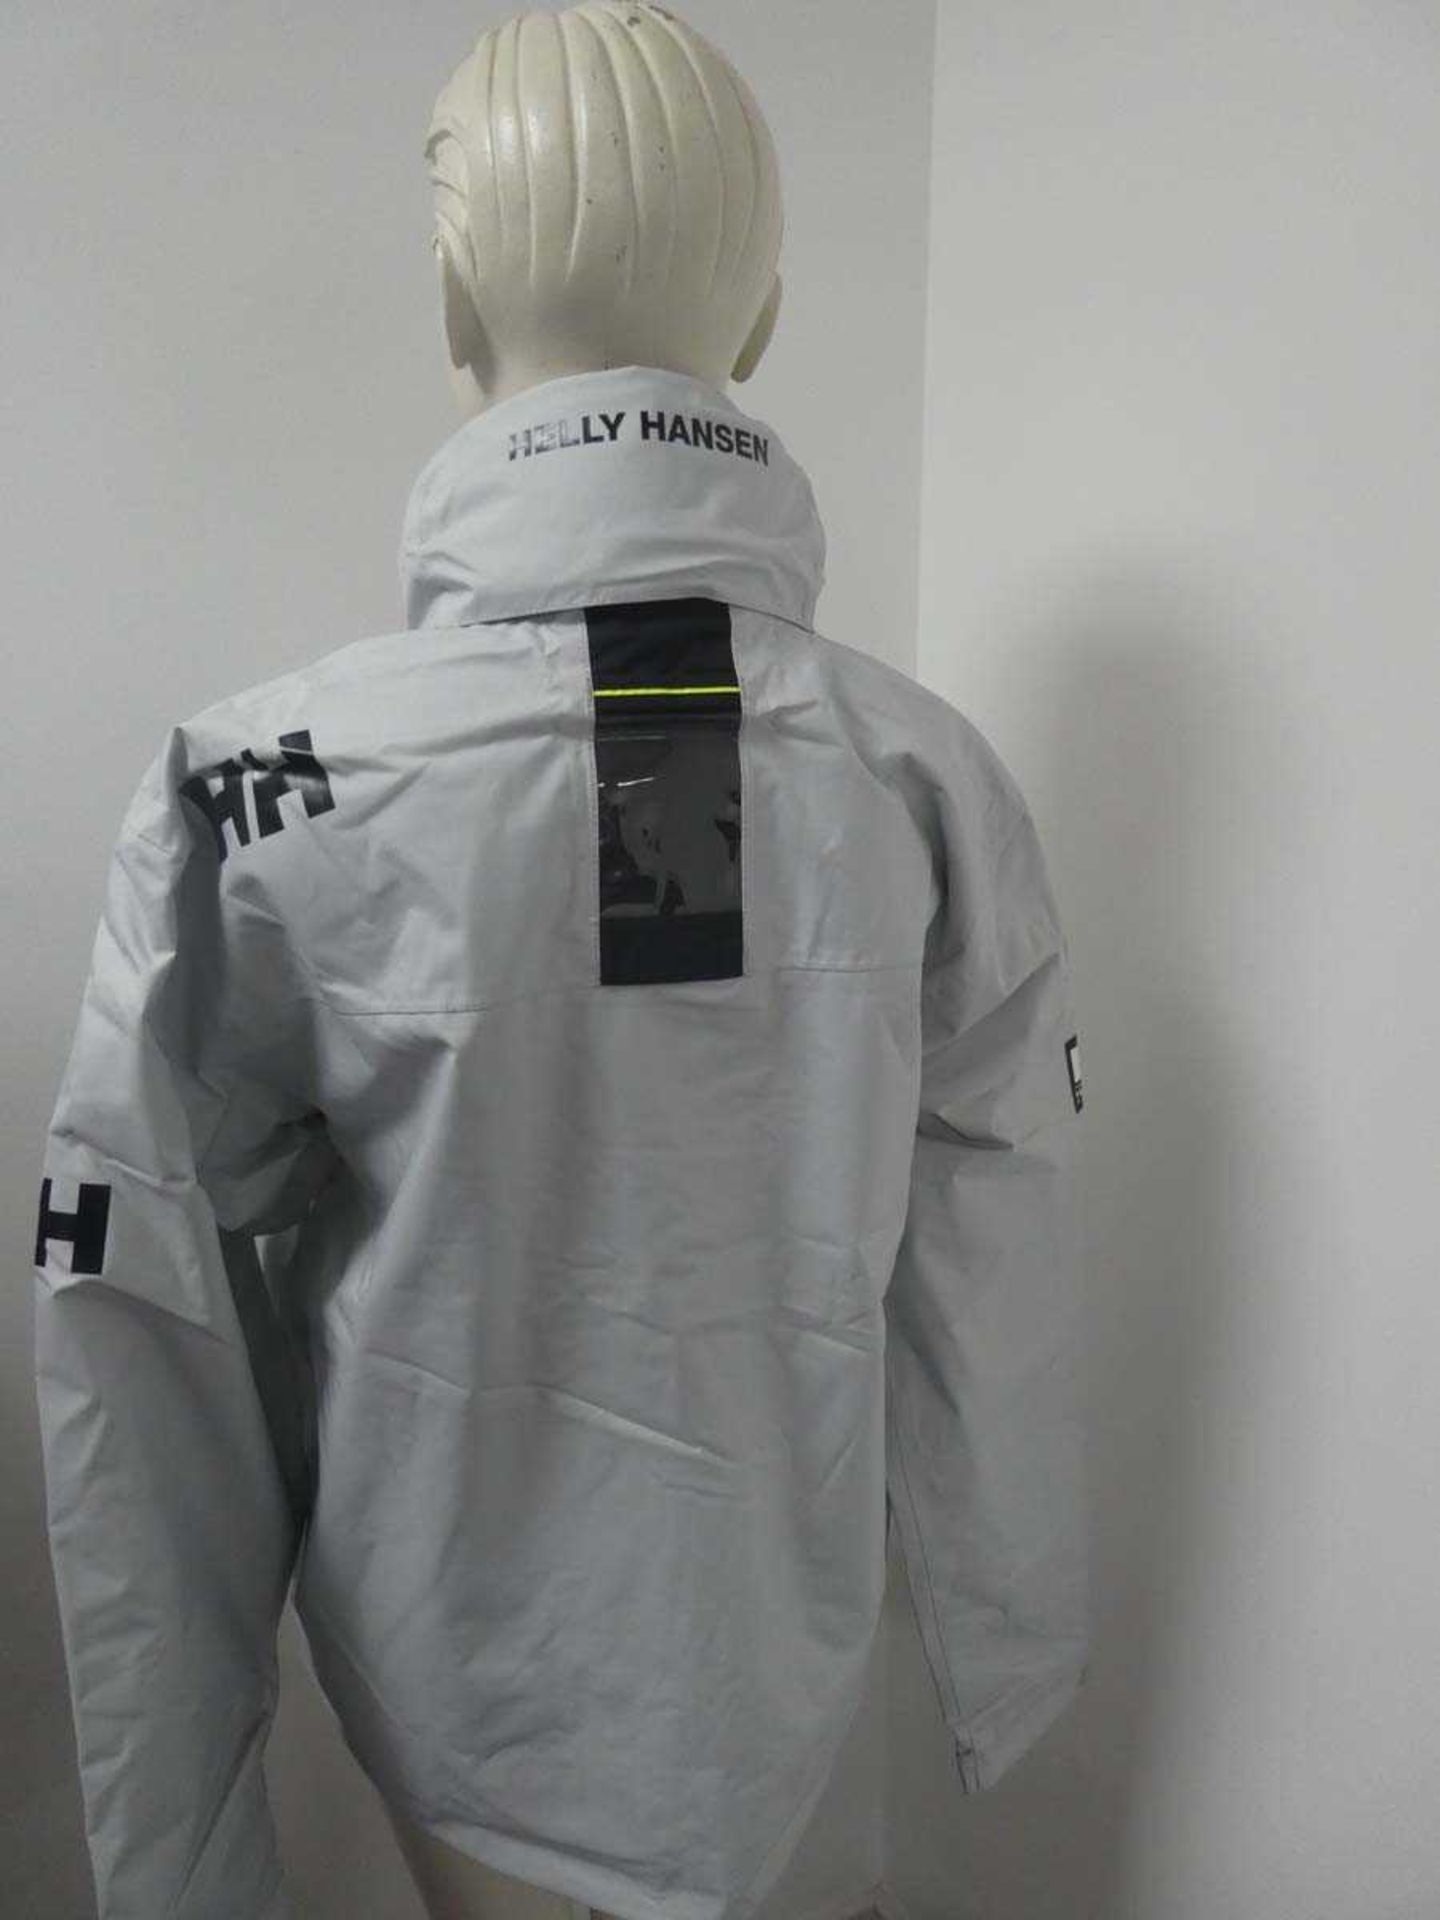 +VAT Helly Hansen crew hooded midlayer jacket in grey fog, size large (hanging) - Image 2 of 2